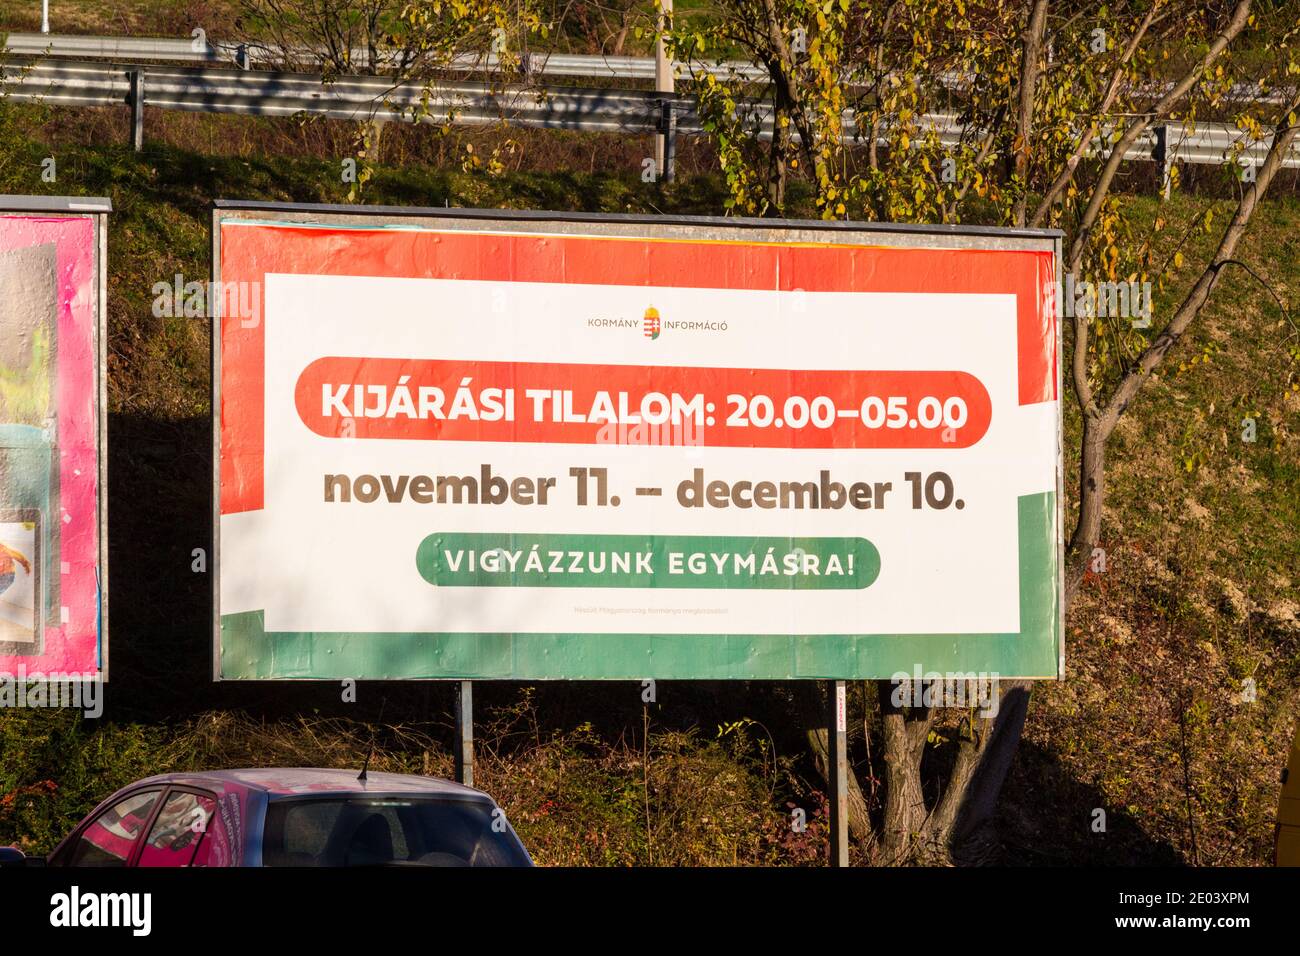 'Kijarasi tilalom' (night curfew) billboard sign, during covid-19 pandemic in winter 2020, Sopron, Hungary Stock Photo